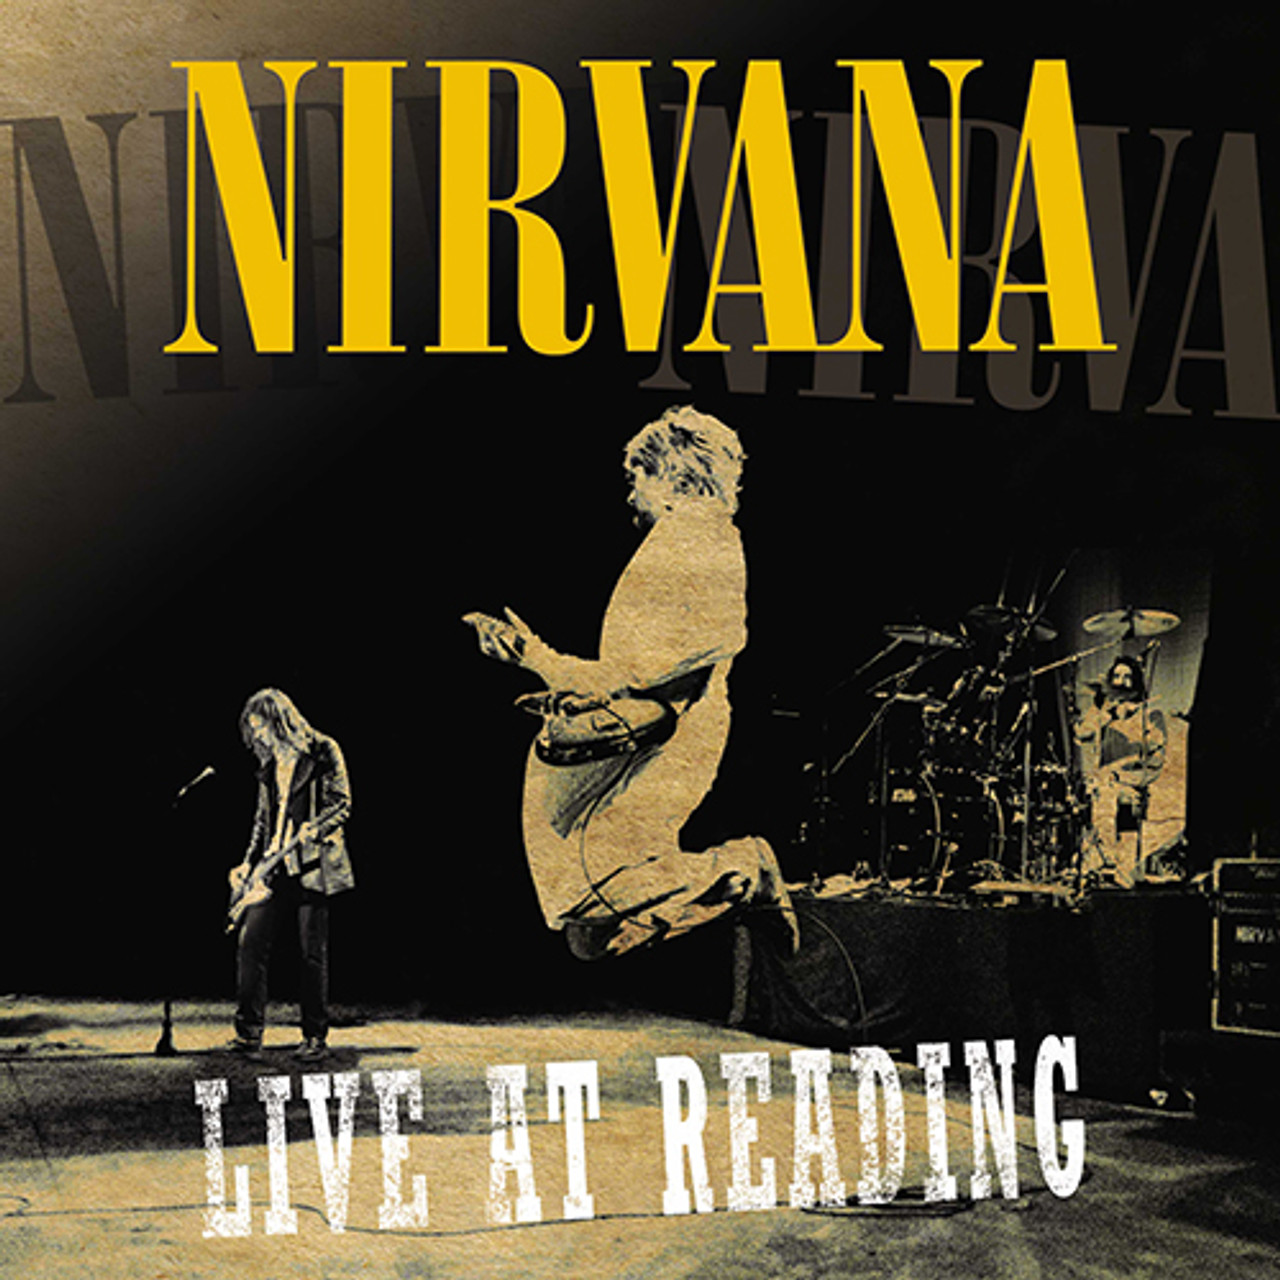 Nirvana "Live At Reading" 2LP